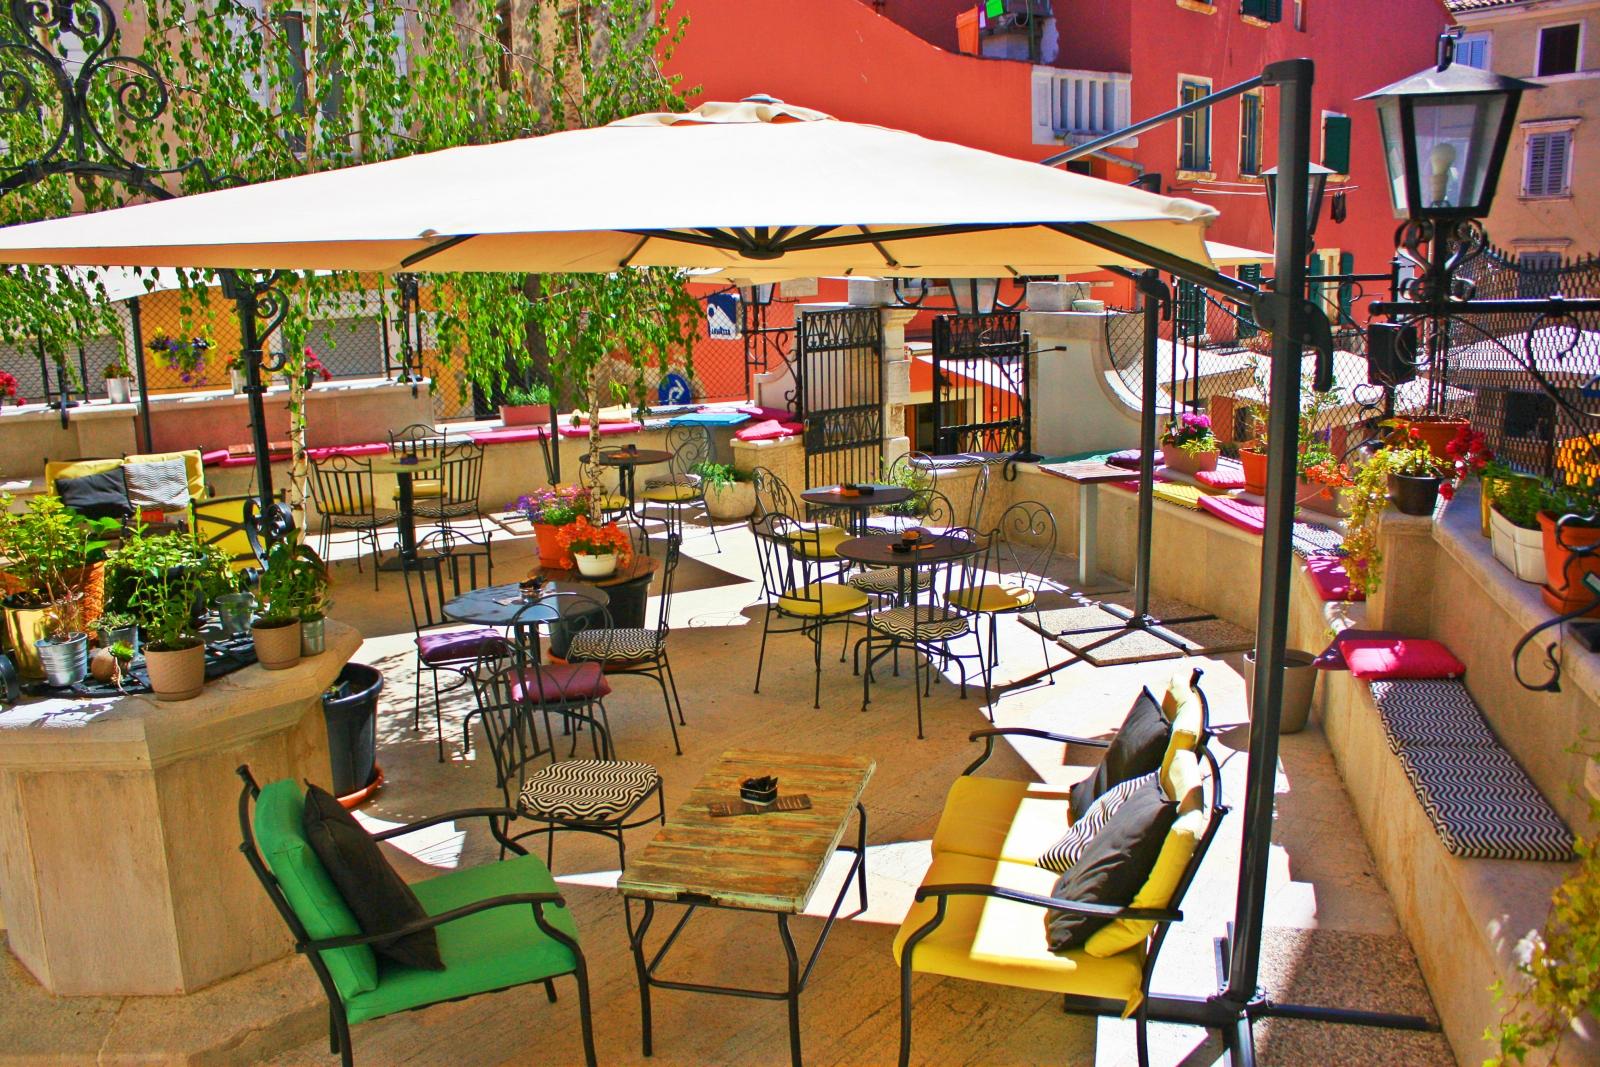 Aperitiv bar Circolo - your favorite hangout place